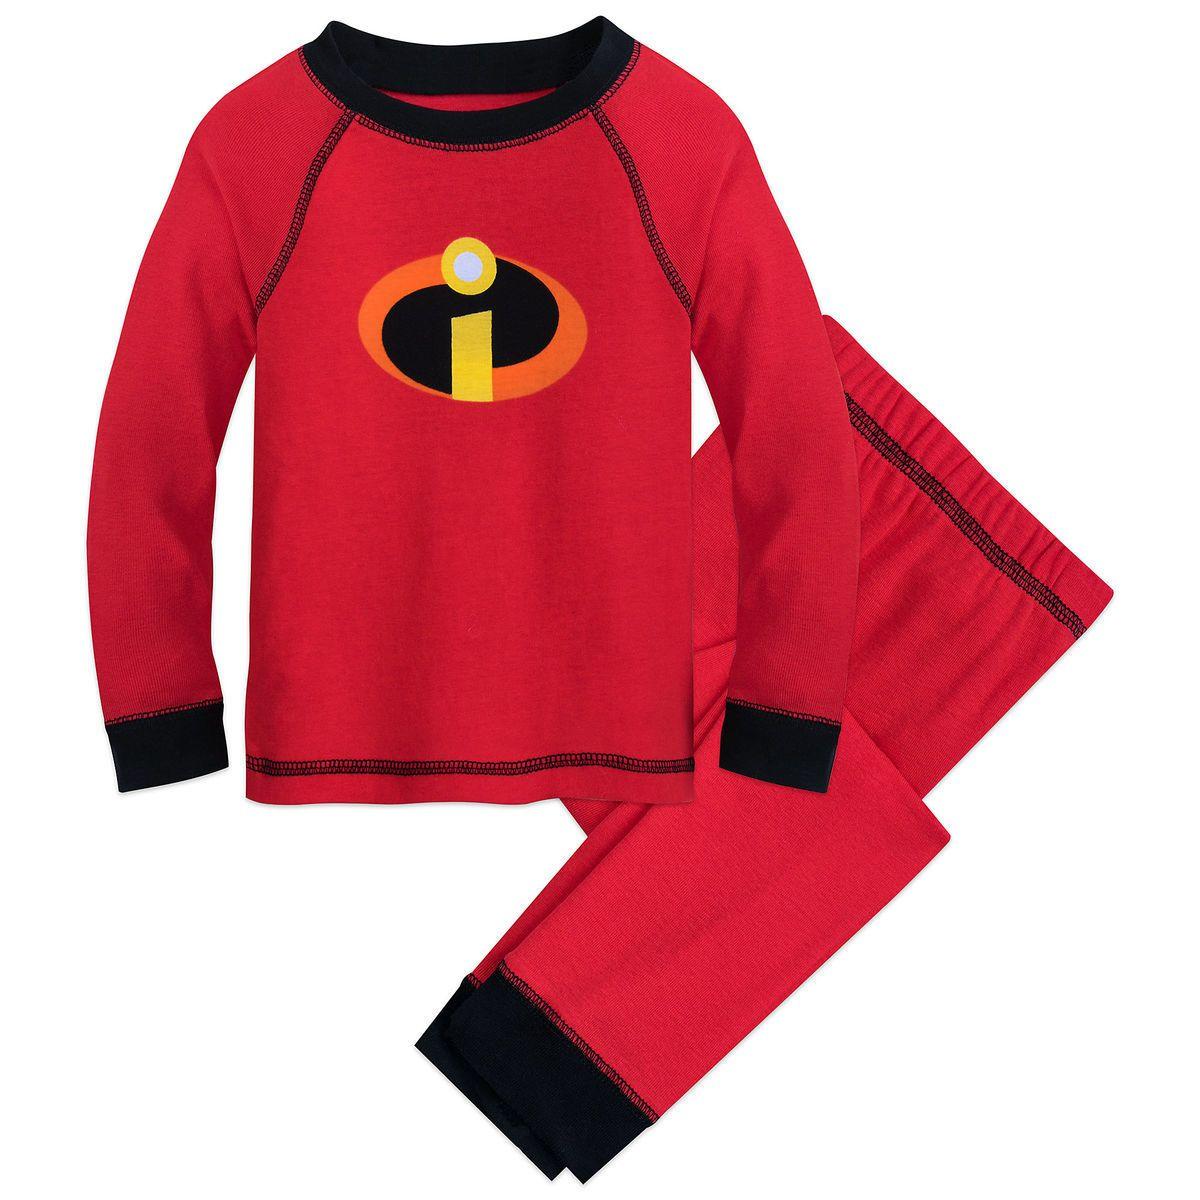 Incredibles Logo - Incredibles Logo PJ PALS for Kids | shopDisney